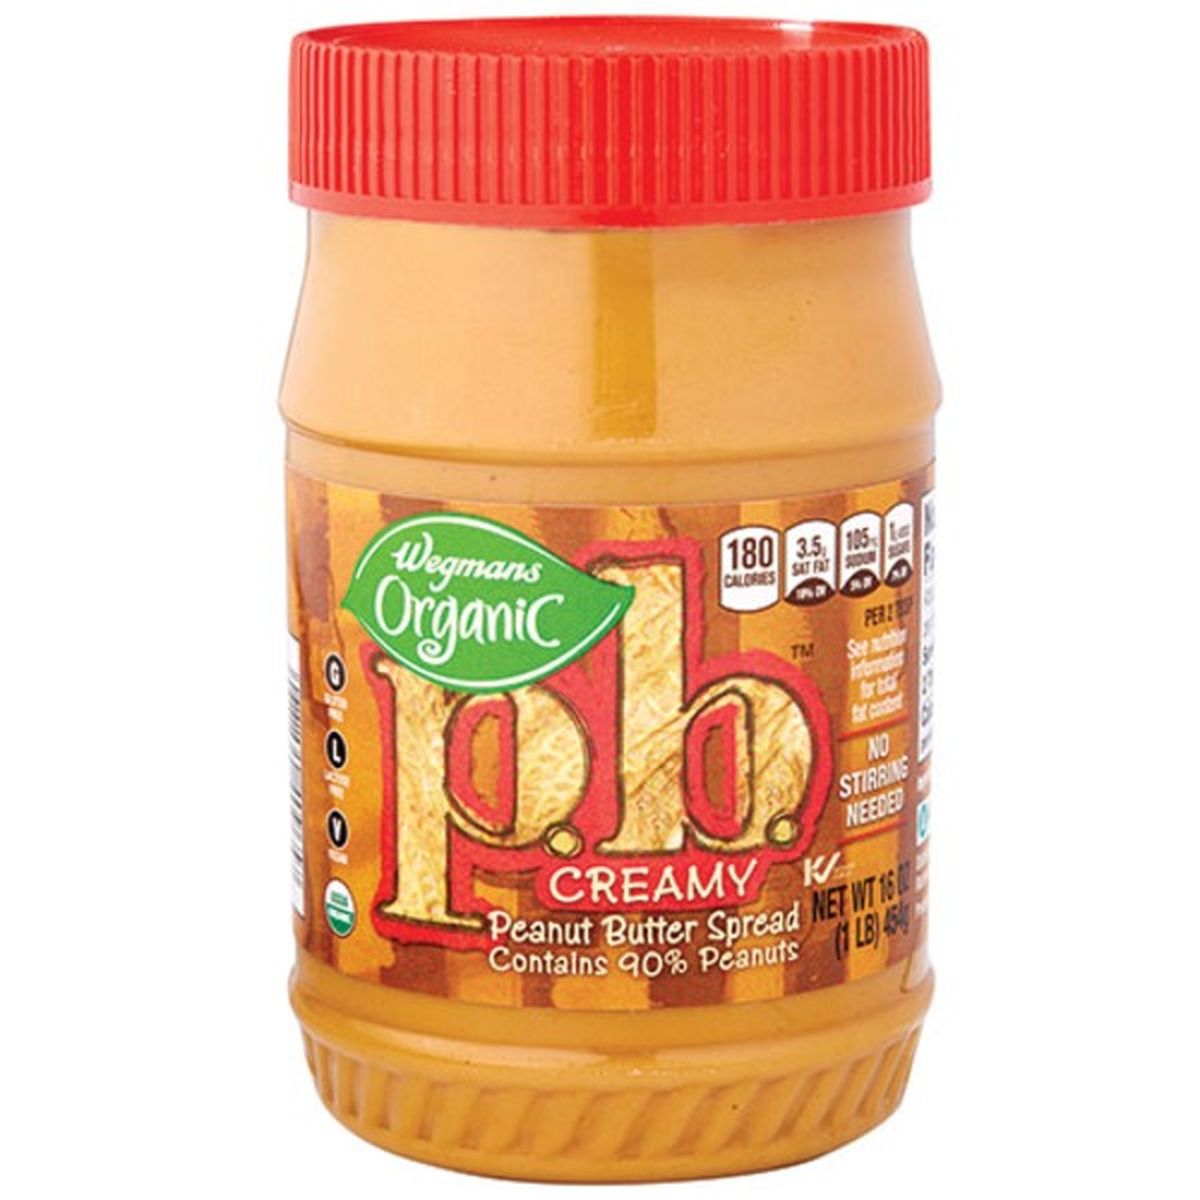 Calories in Wegmans Organic Creamy p.b. Peanut Butter Spread